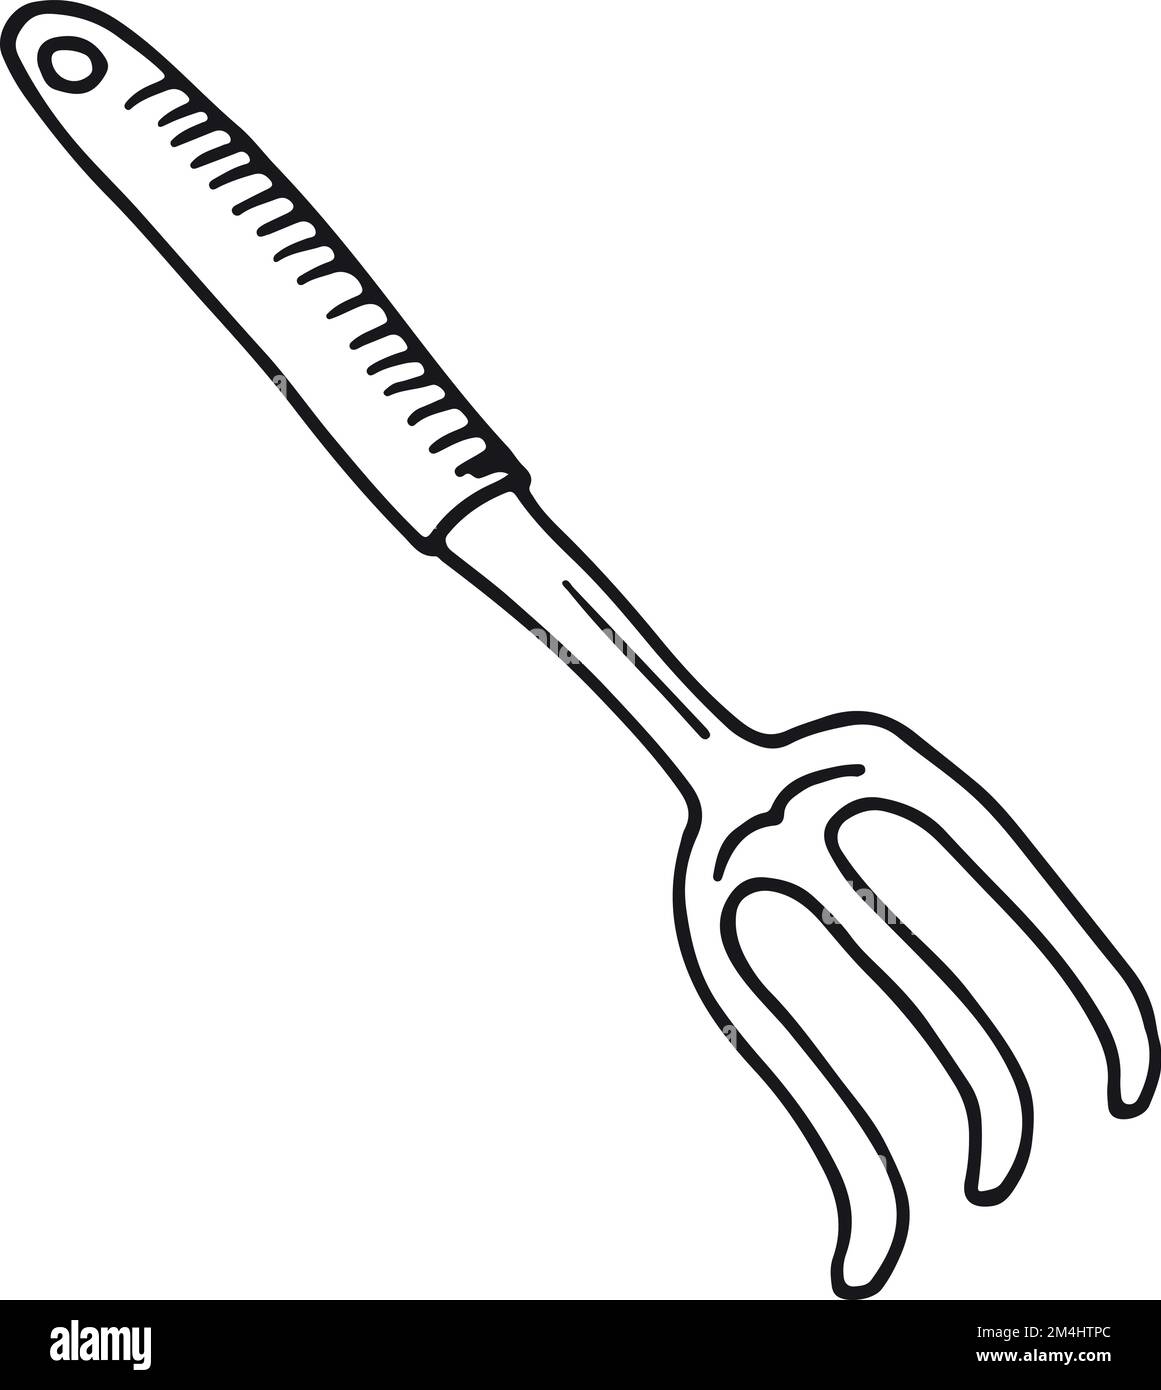 Gardening fork icon. Hand drawn farmer tool Stock Vector